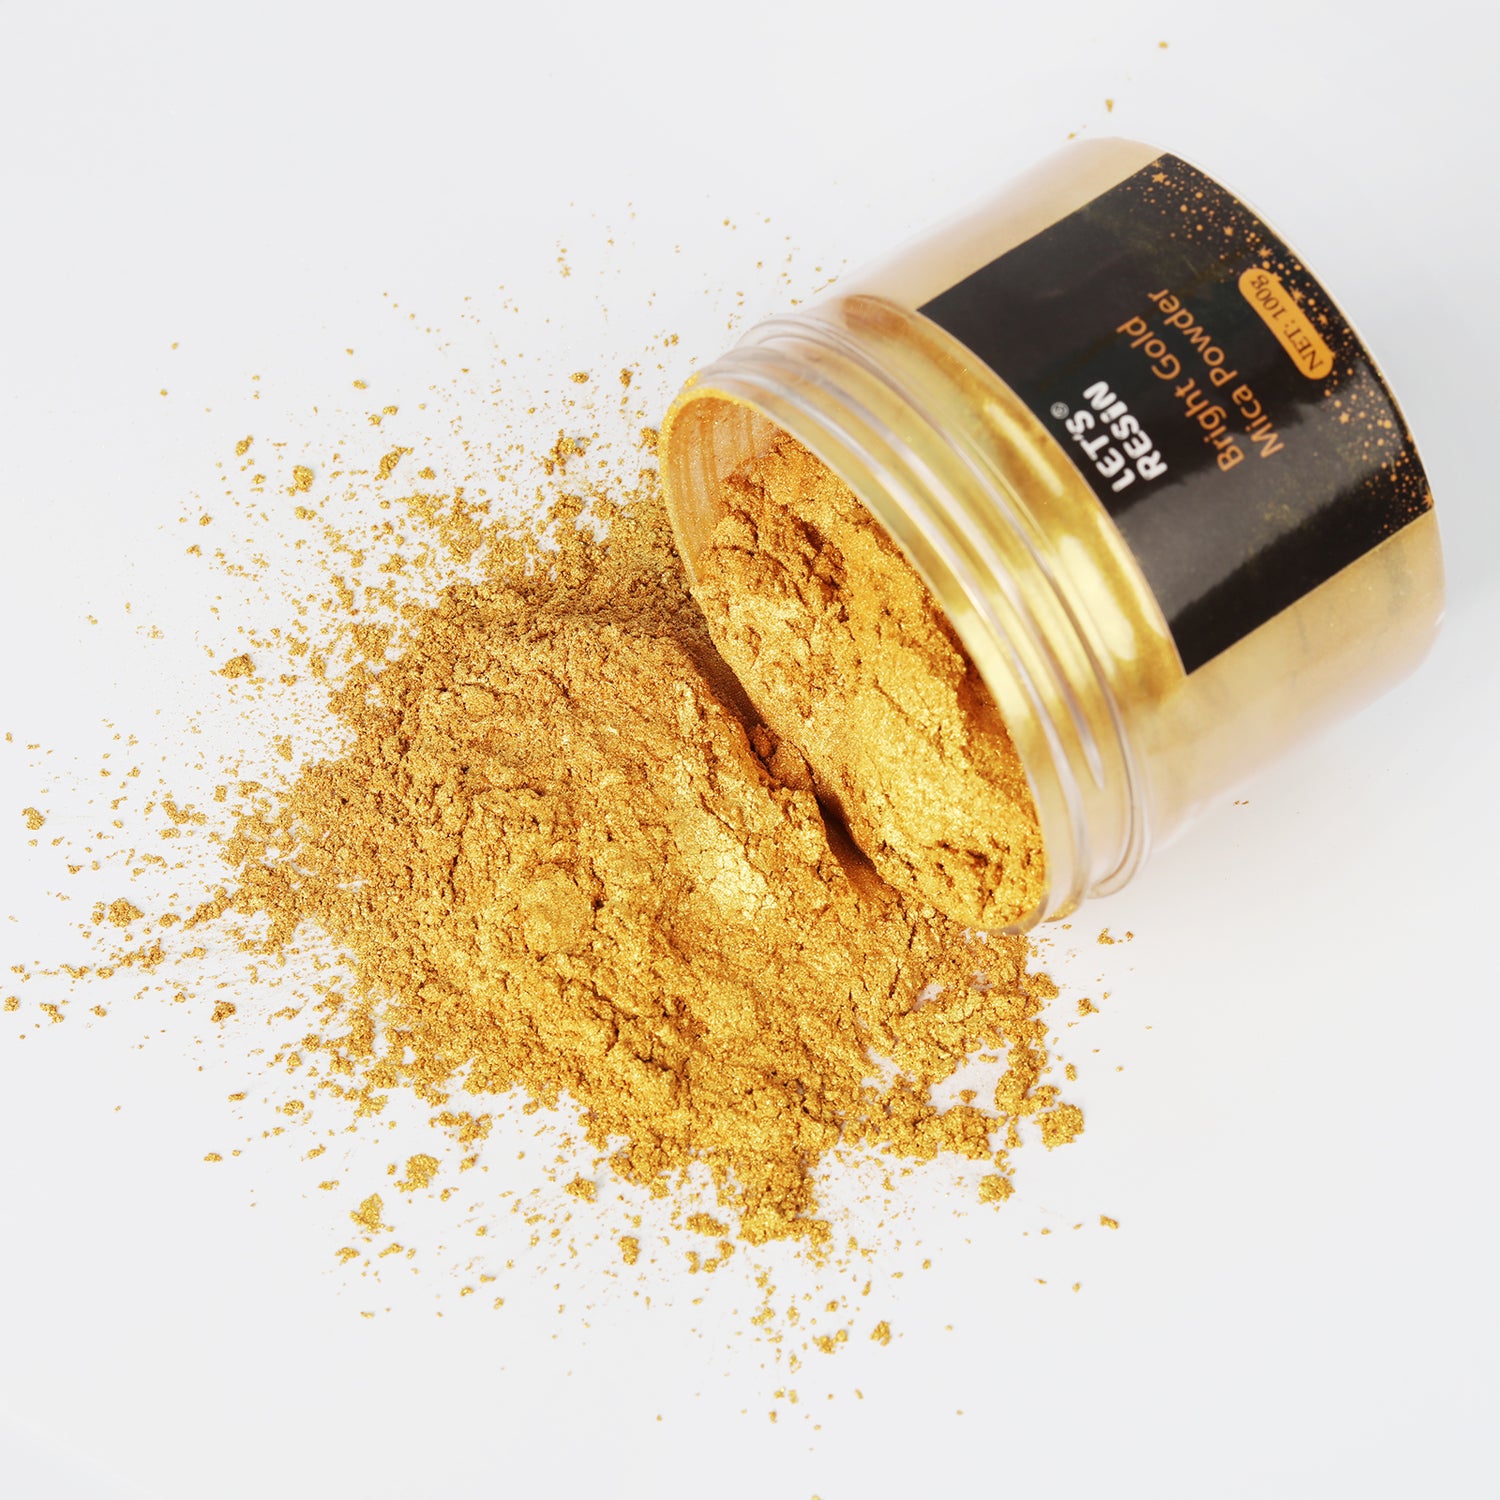 Shop Gold Pigment Powder For Nails online